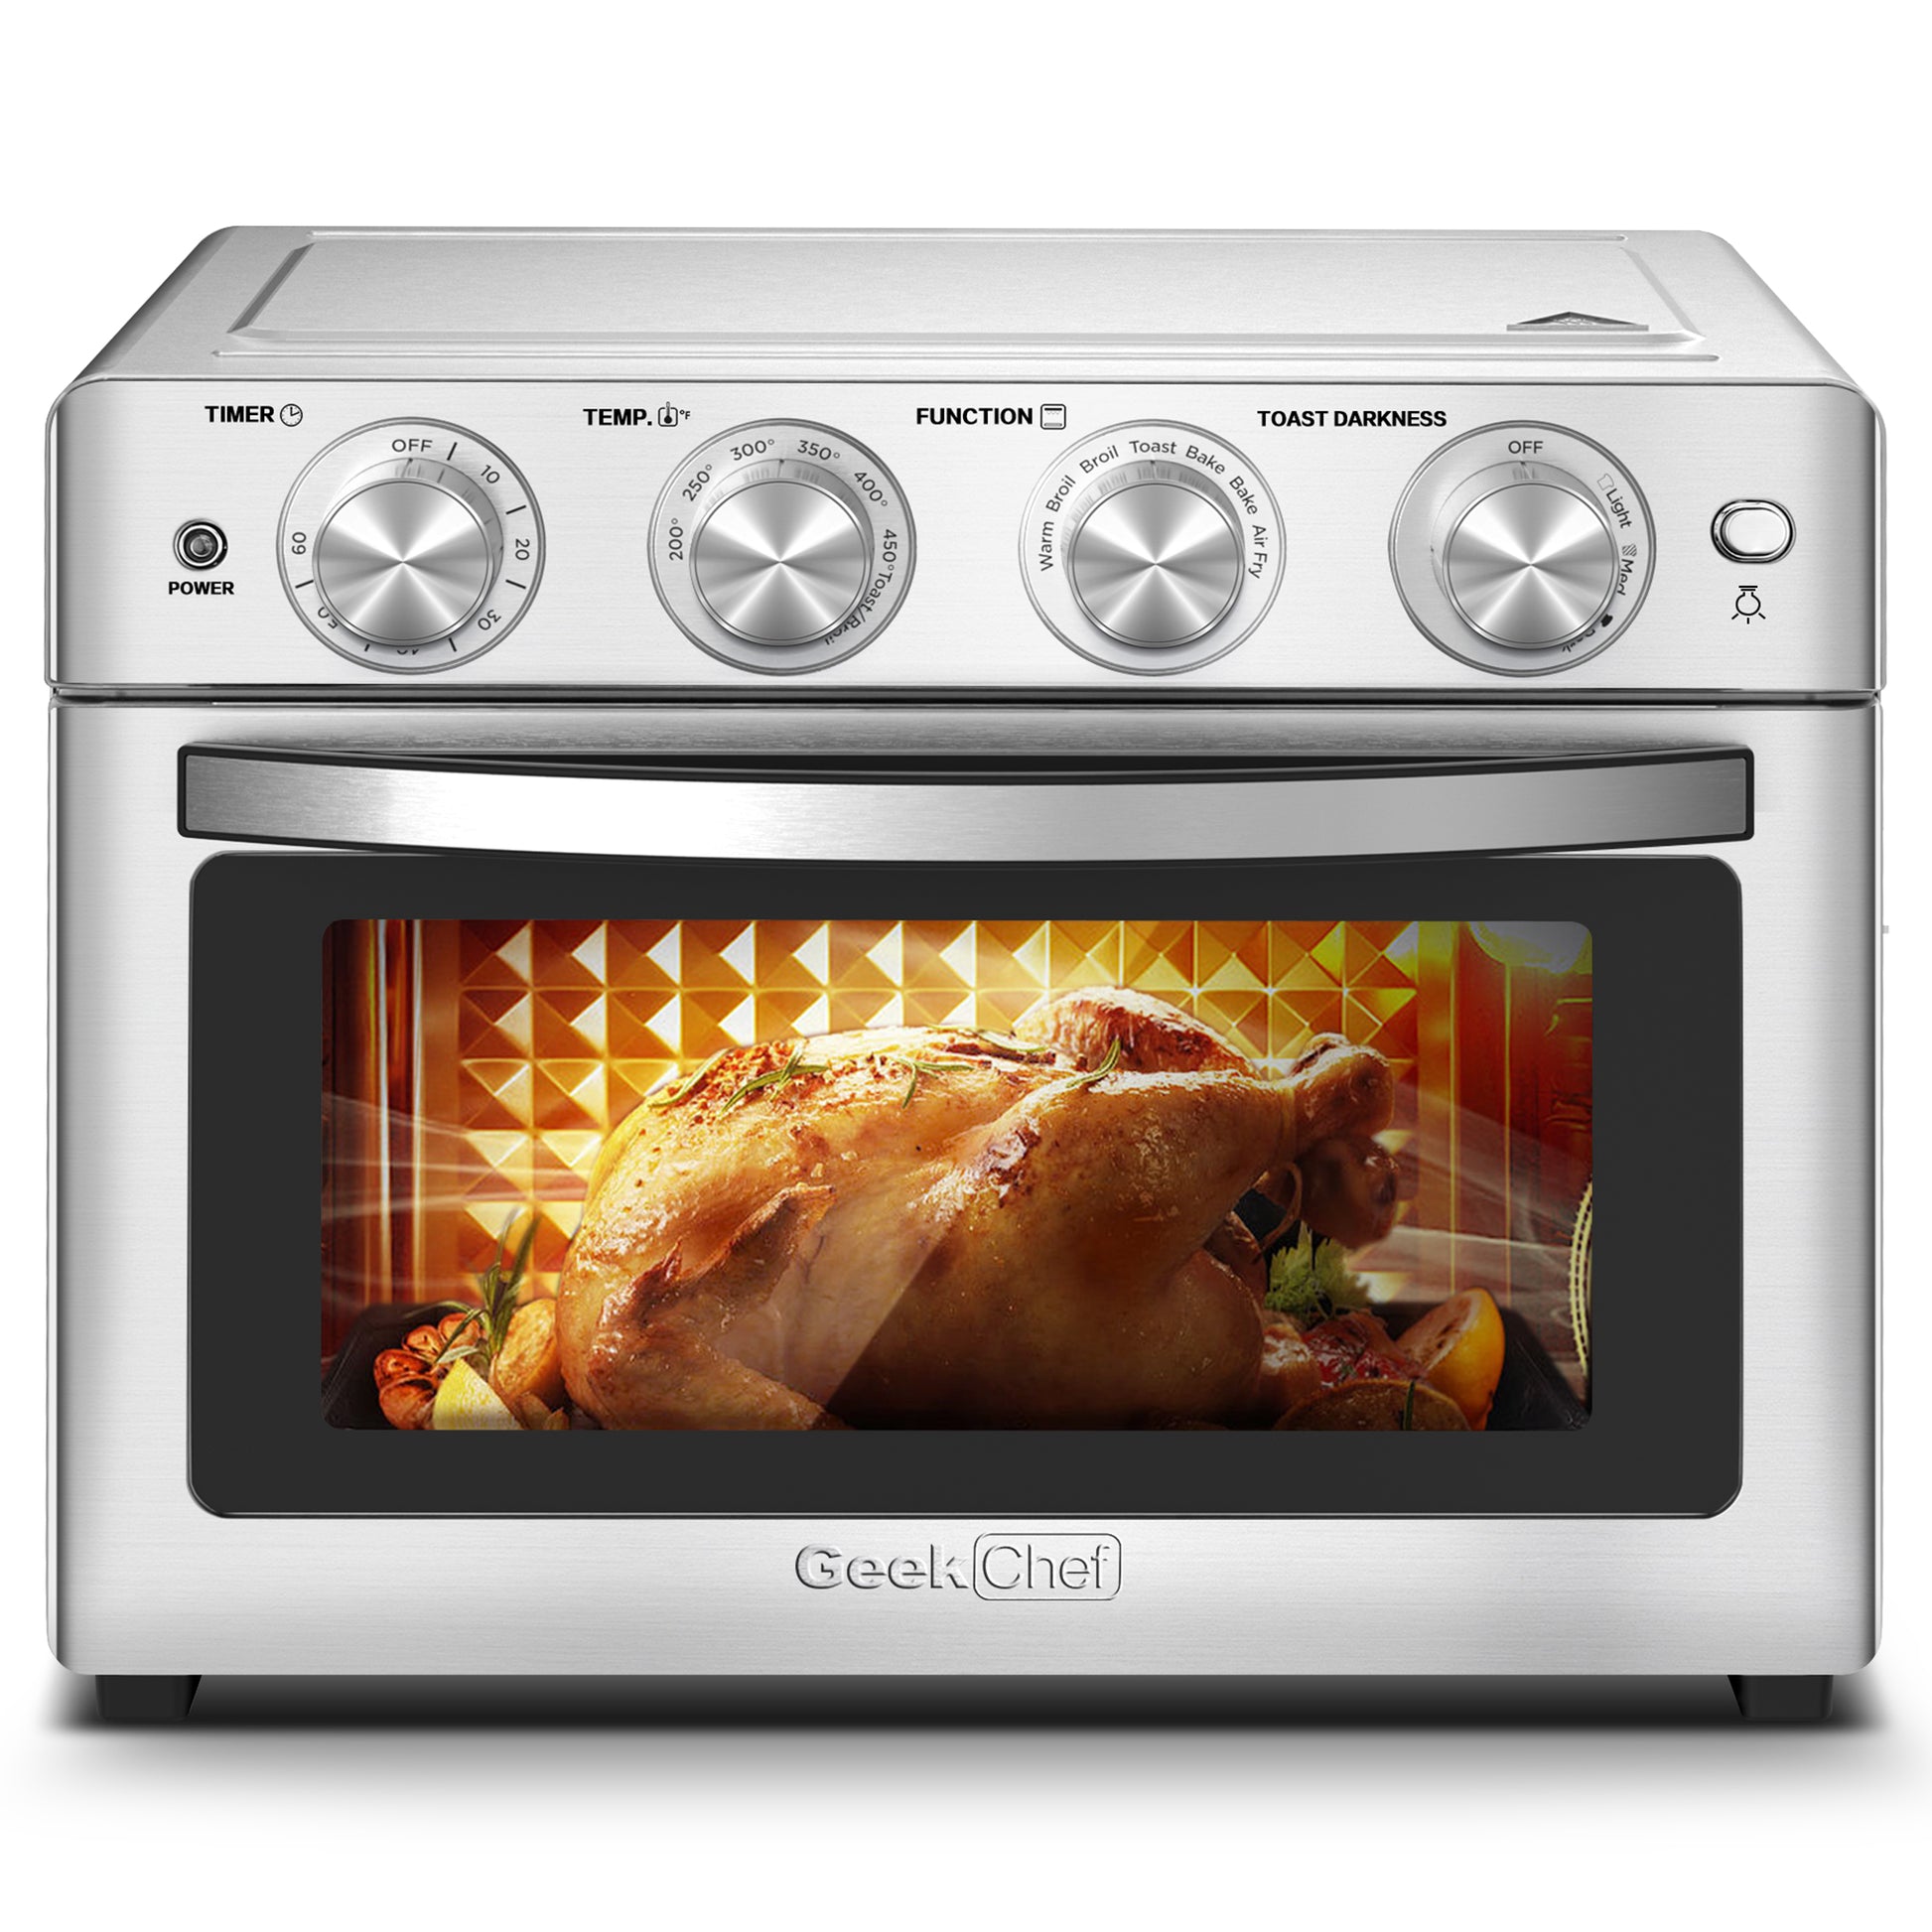 Best air fryer deal: Save $60 on Chefman's 26-quart Air Fryer+ Oven